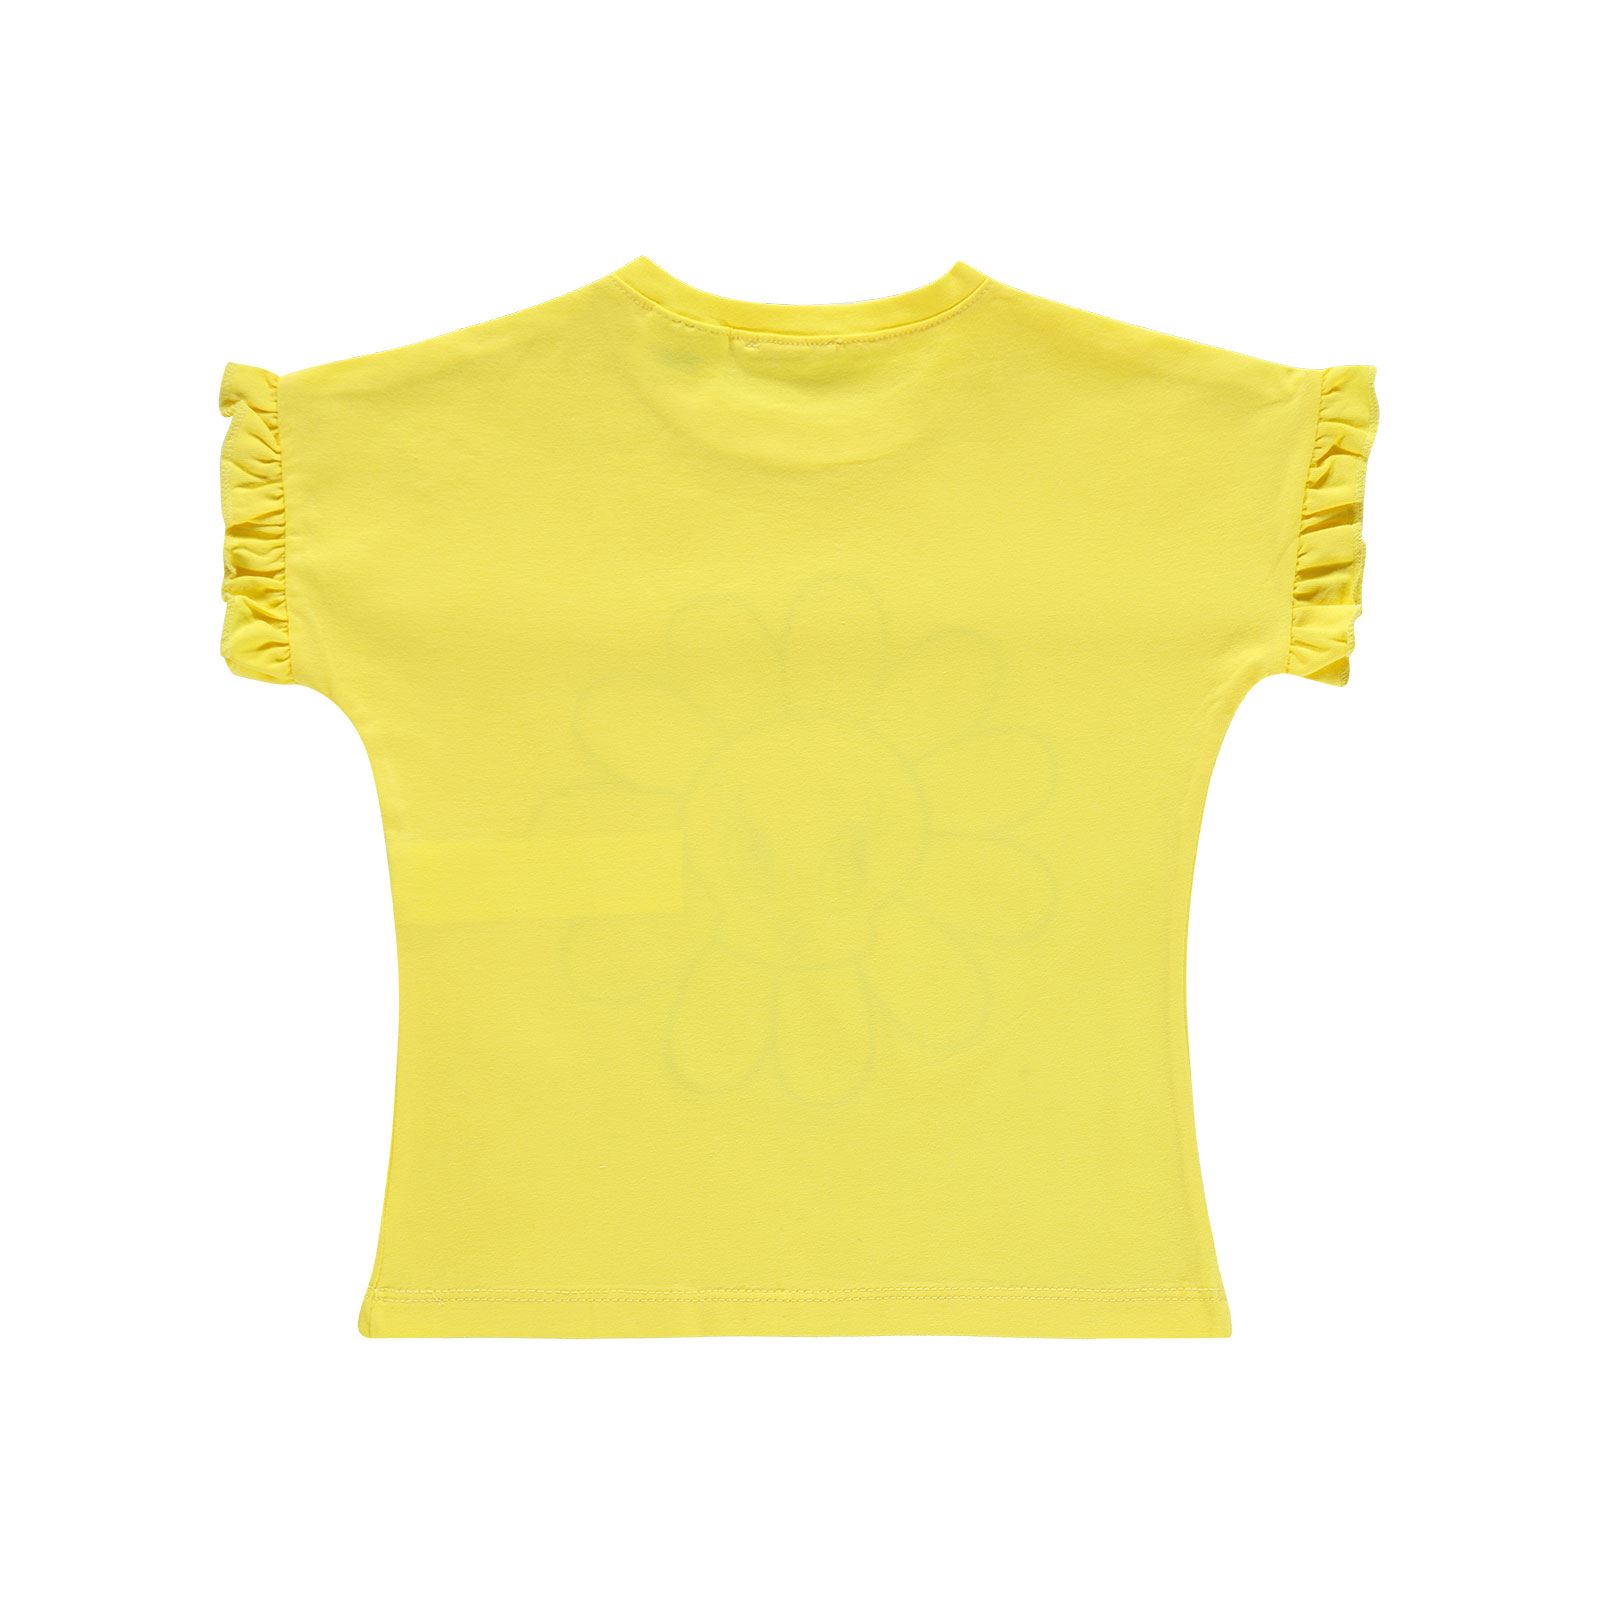 Tweety Kız Çocuk Tişört 2-5 Yaş Sarı